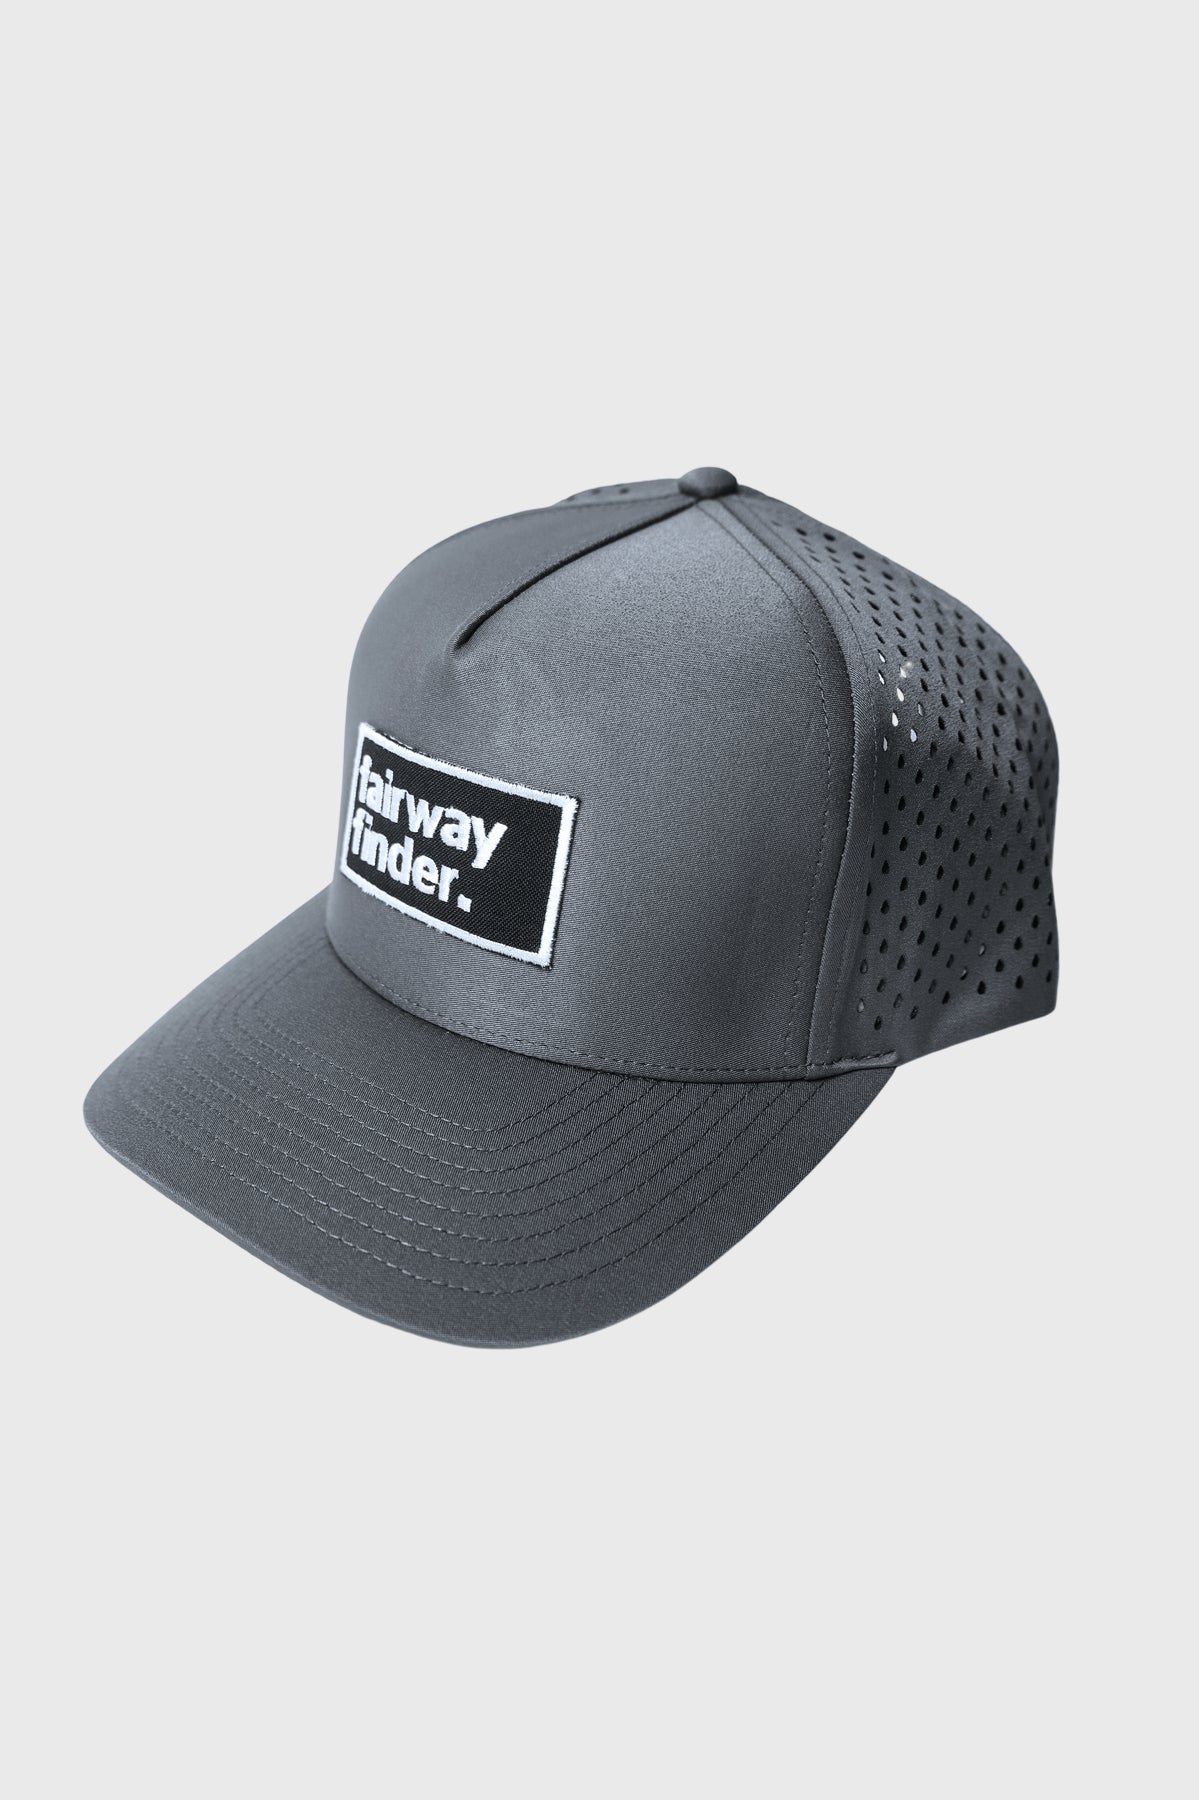 Custom Performance Peak Cap - Fairway Finder Grey